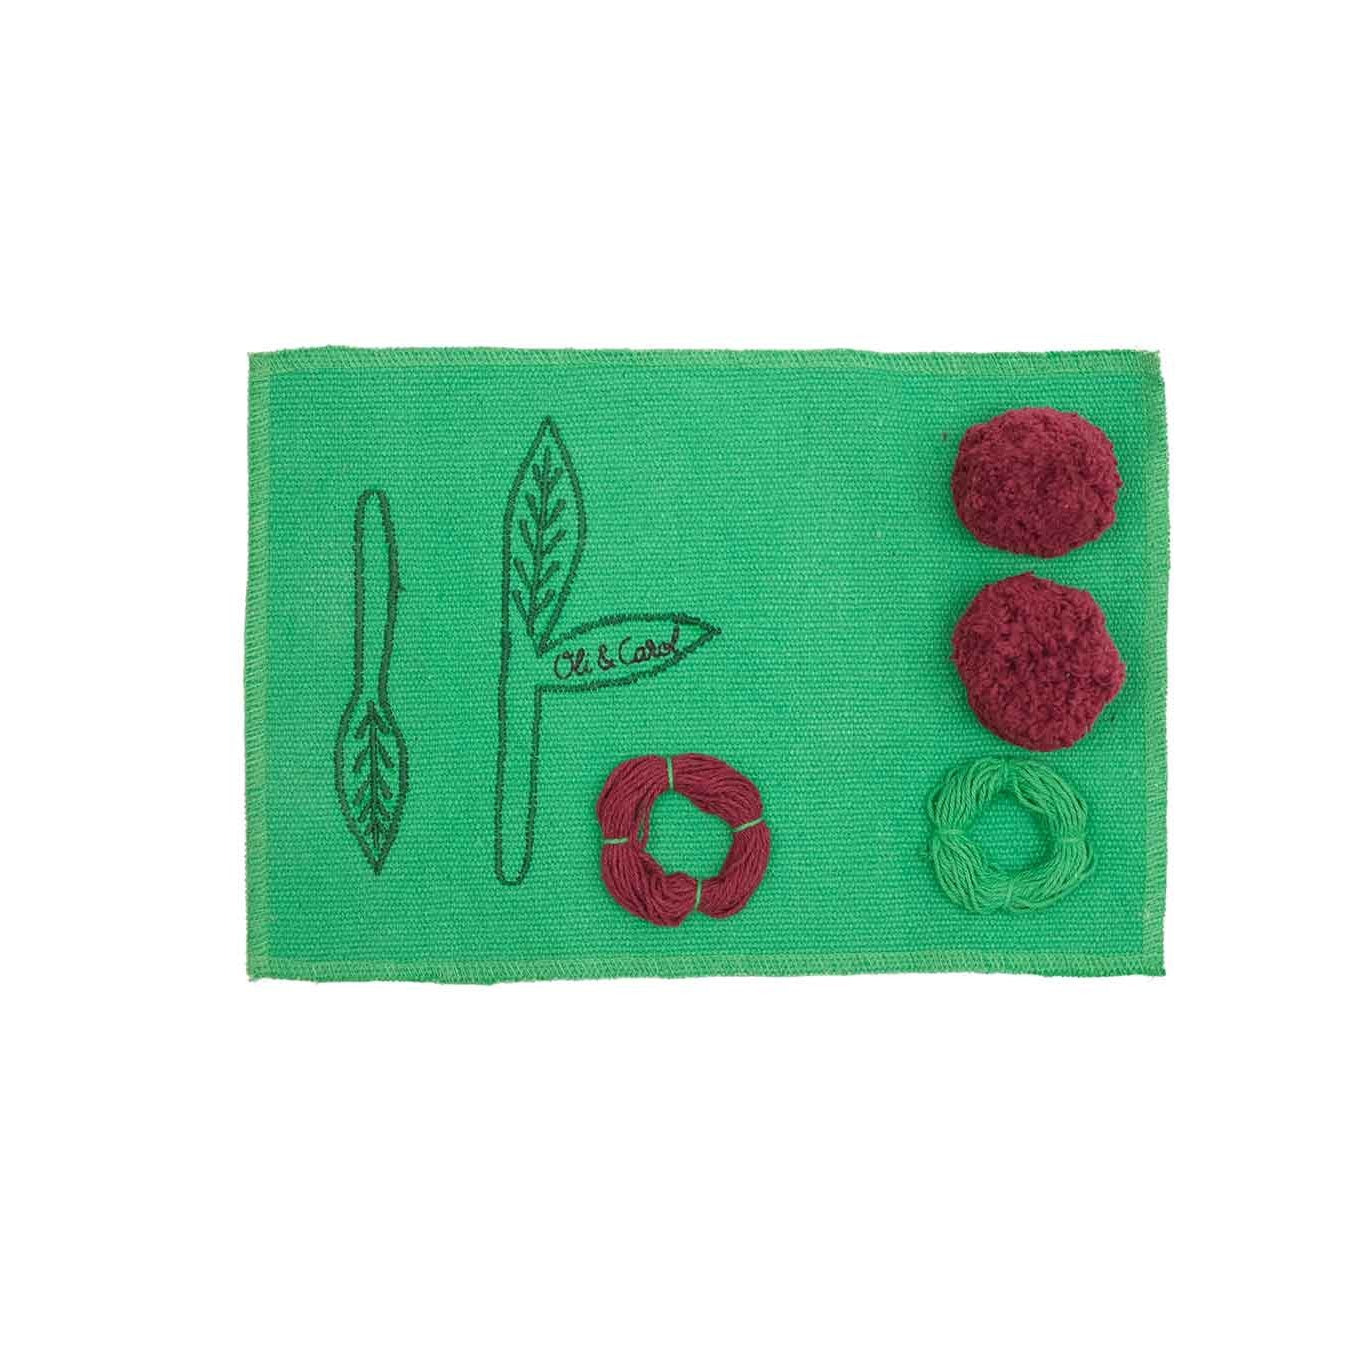 Oli & Carol DIY Sew-Your-Own Mery the Cherry Craft Kit